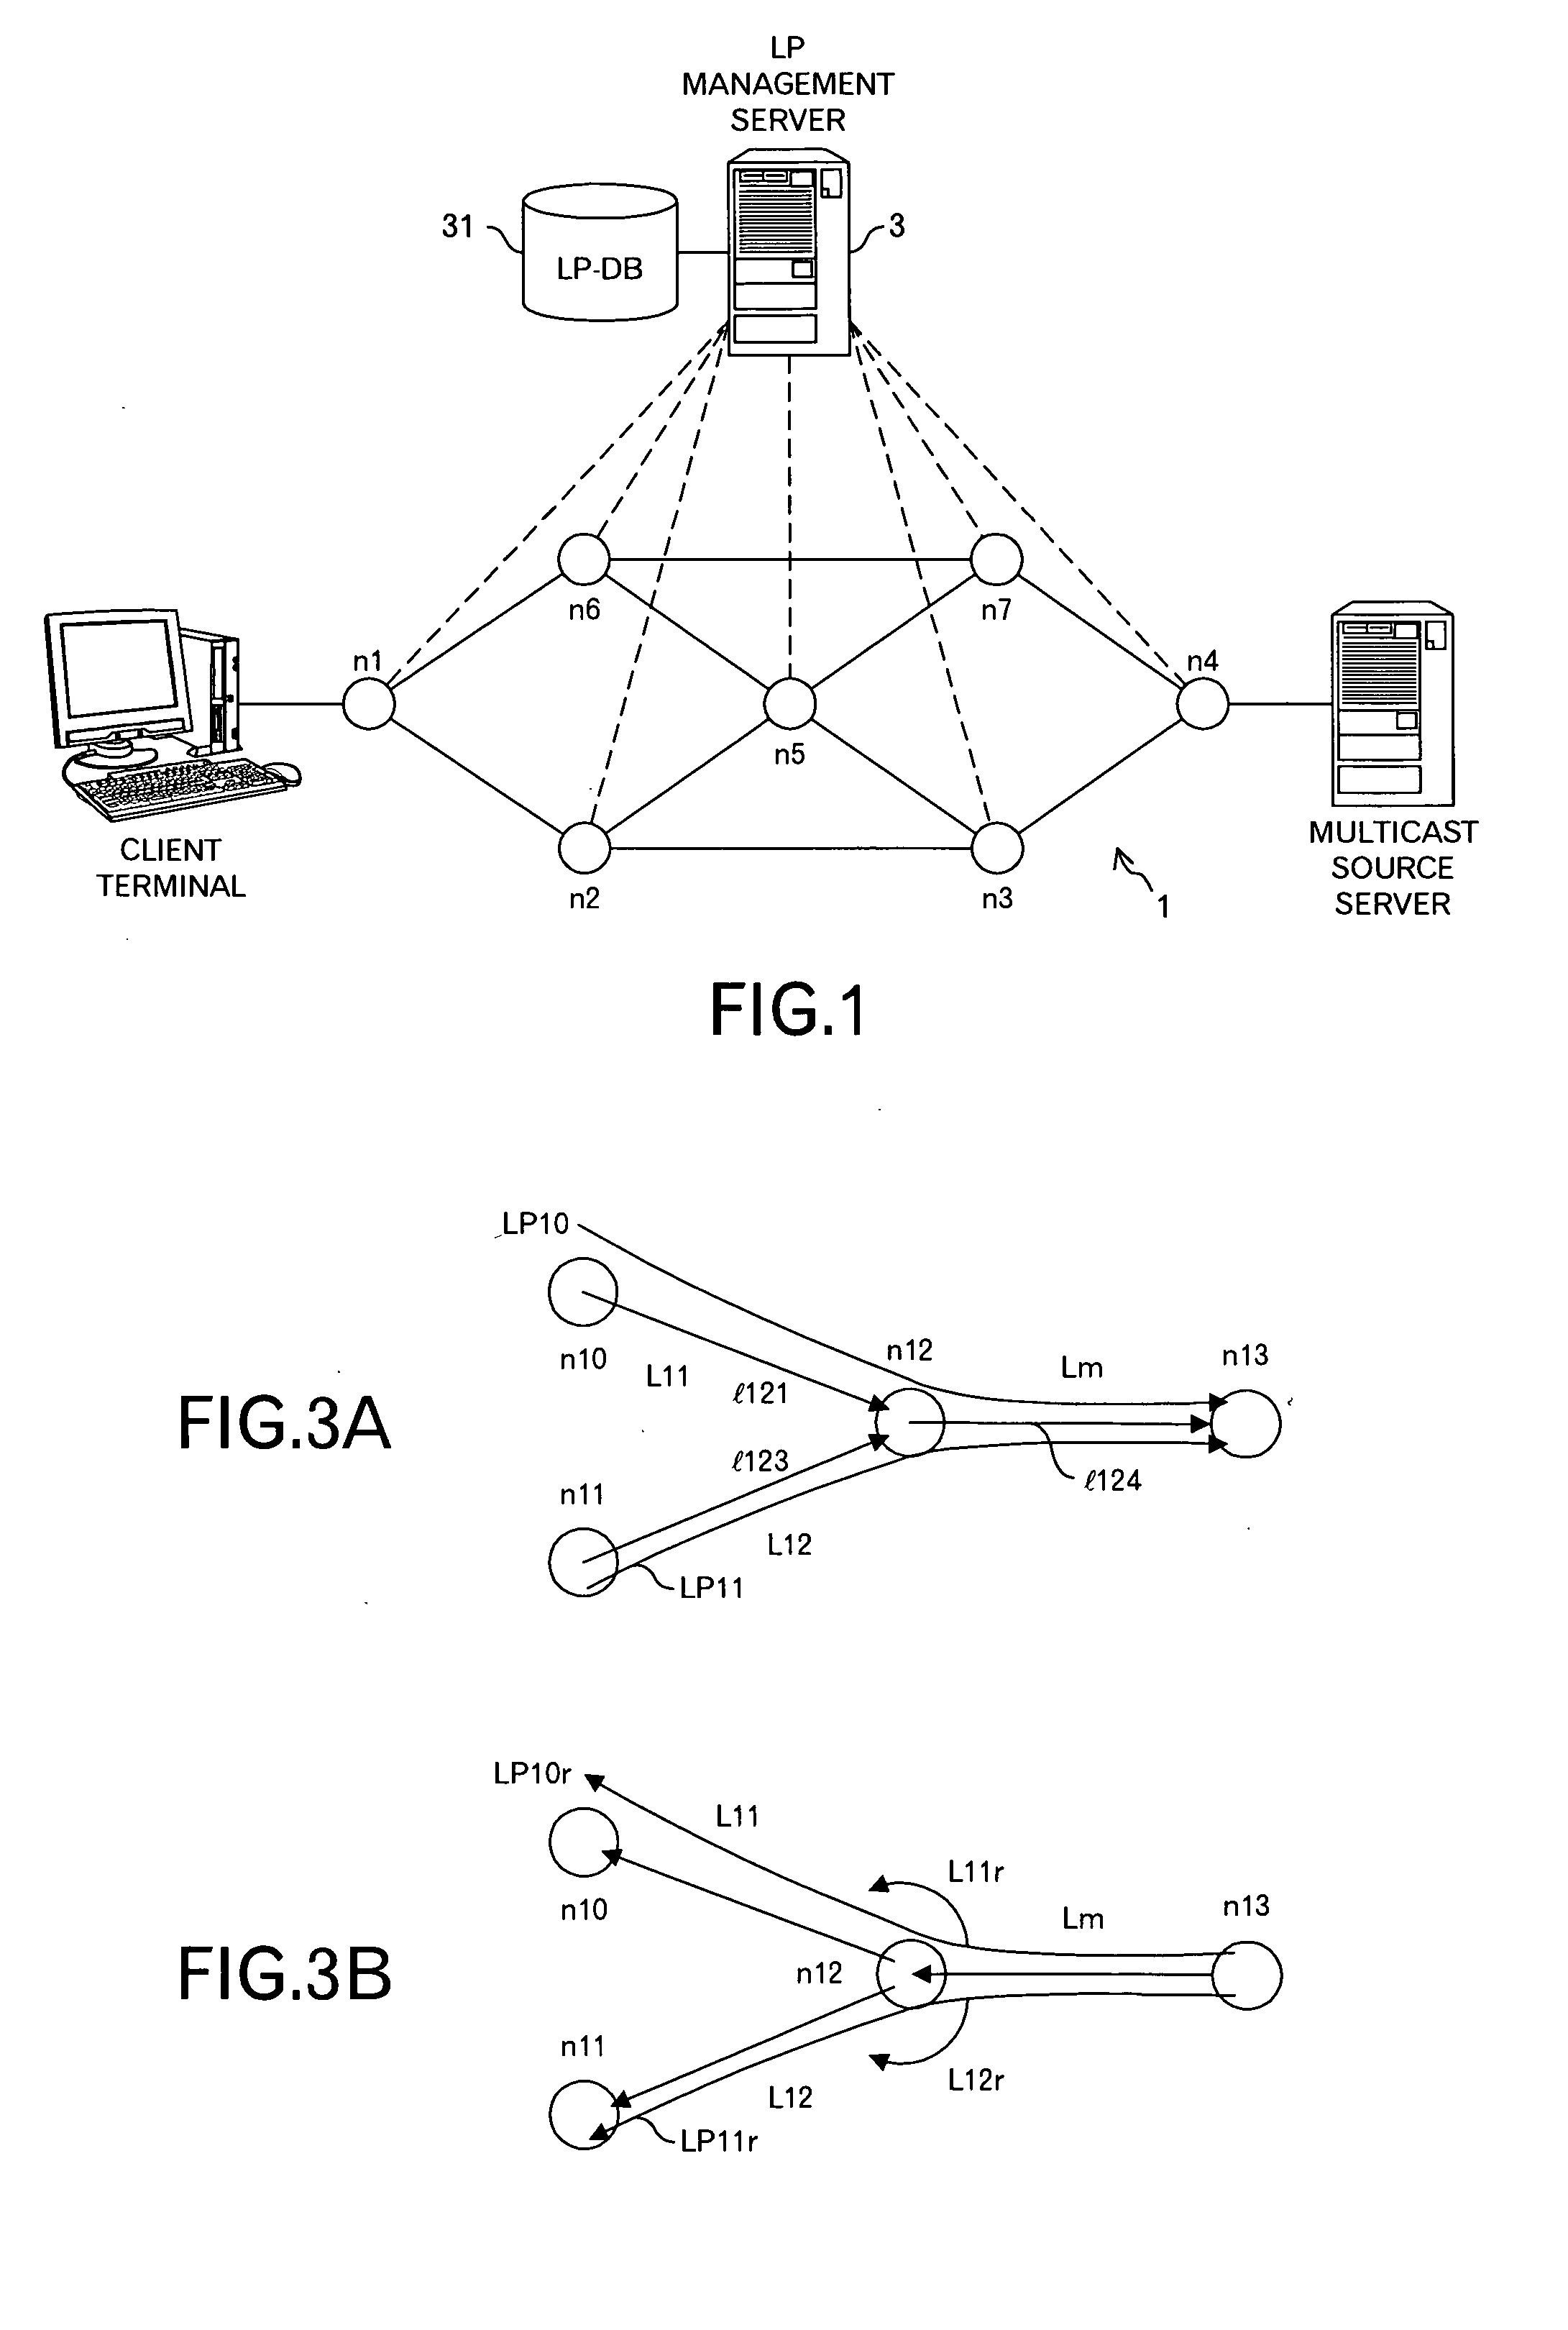 Multicast control technique using MPLS